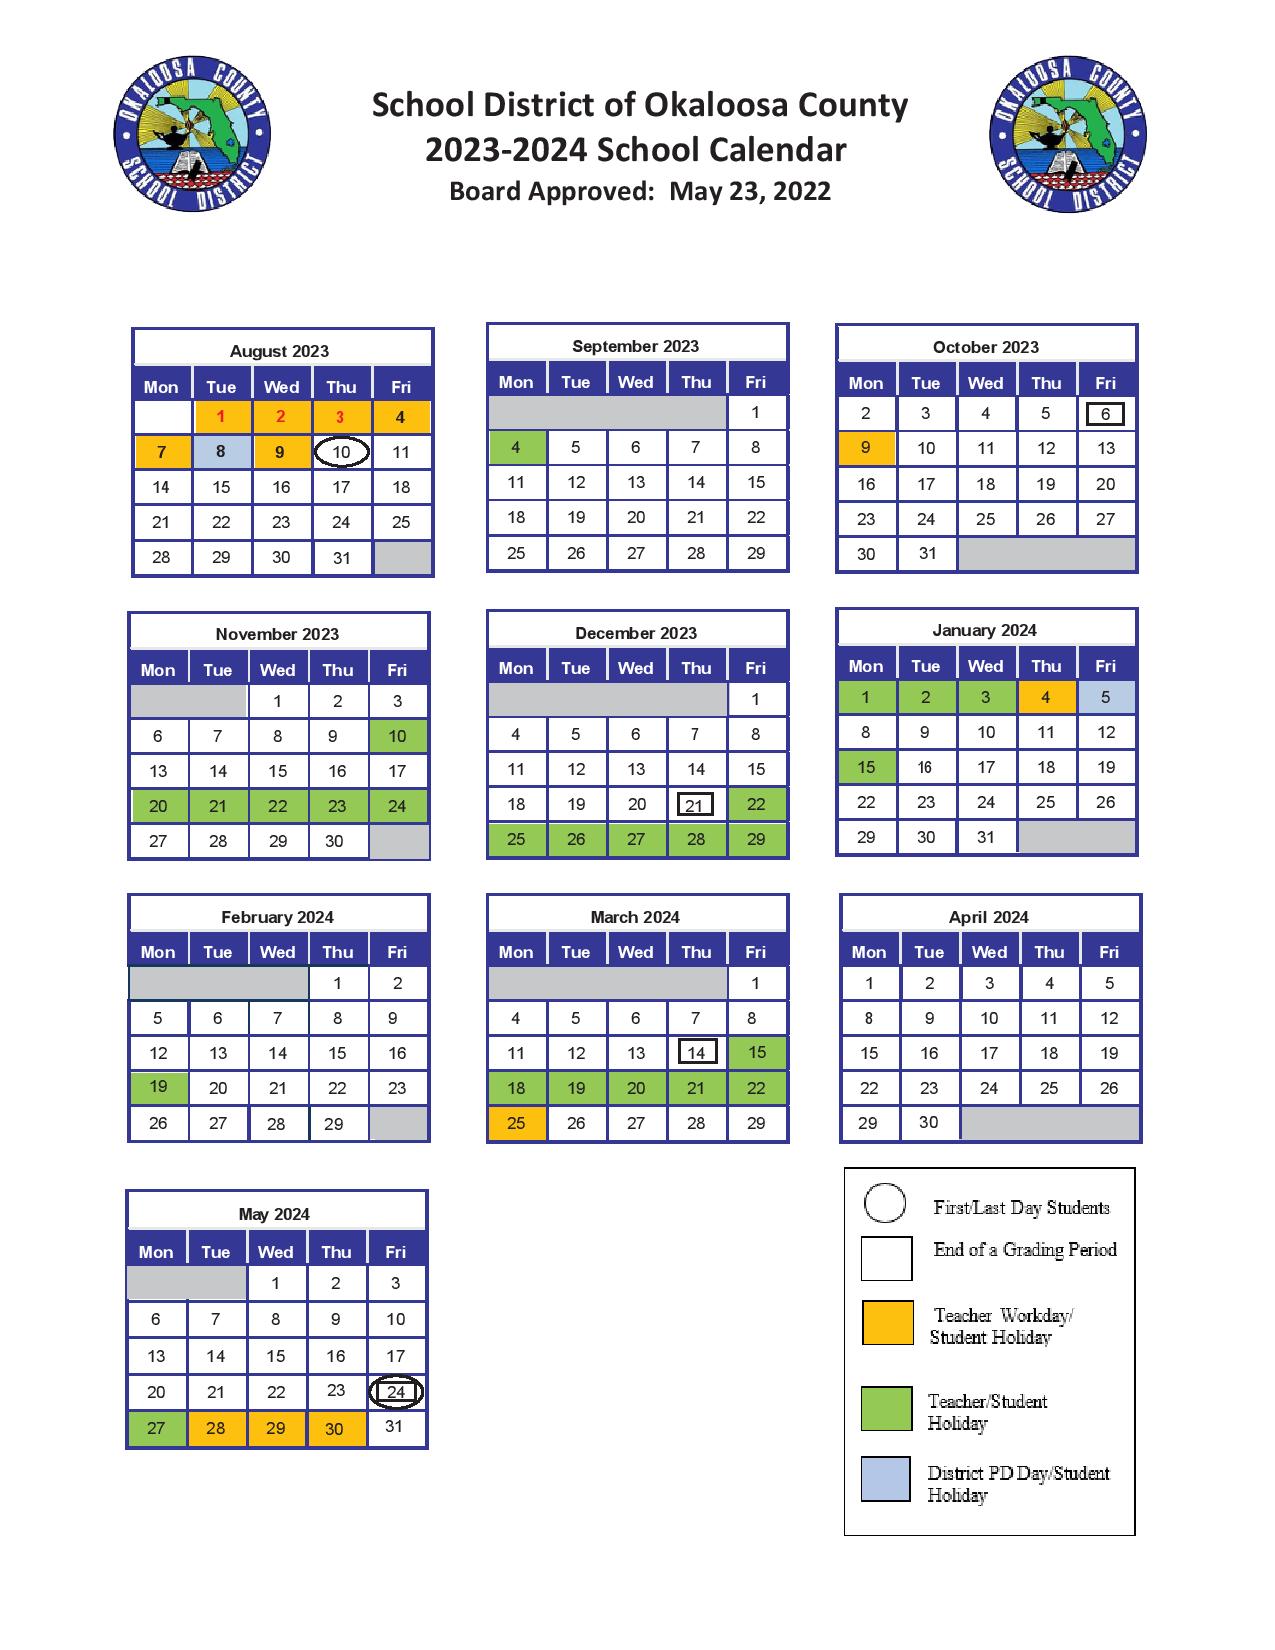 Okaloosa County School District Calendar 2023-2024 in PDF